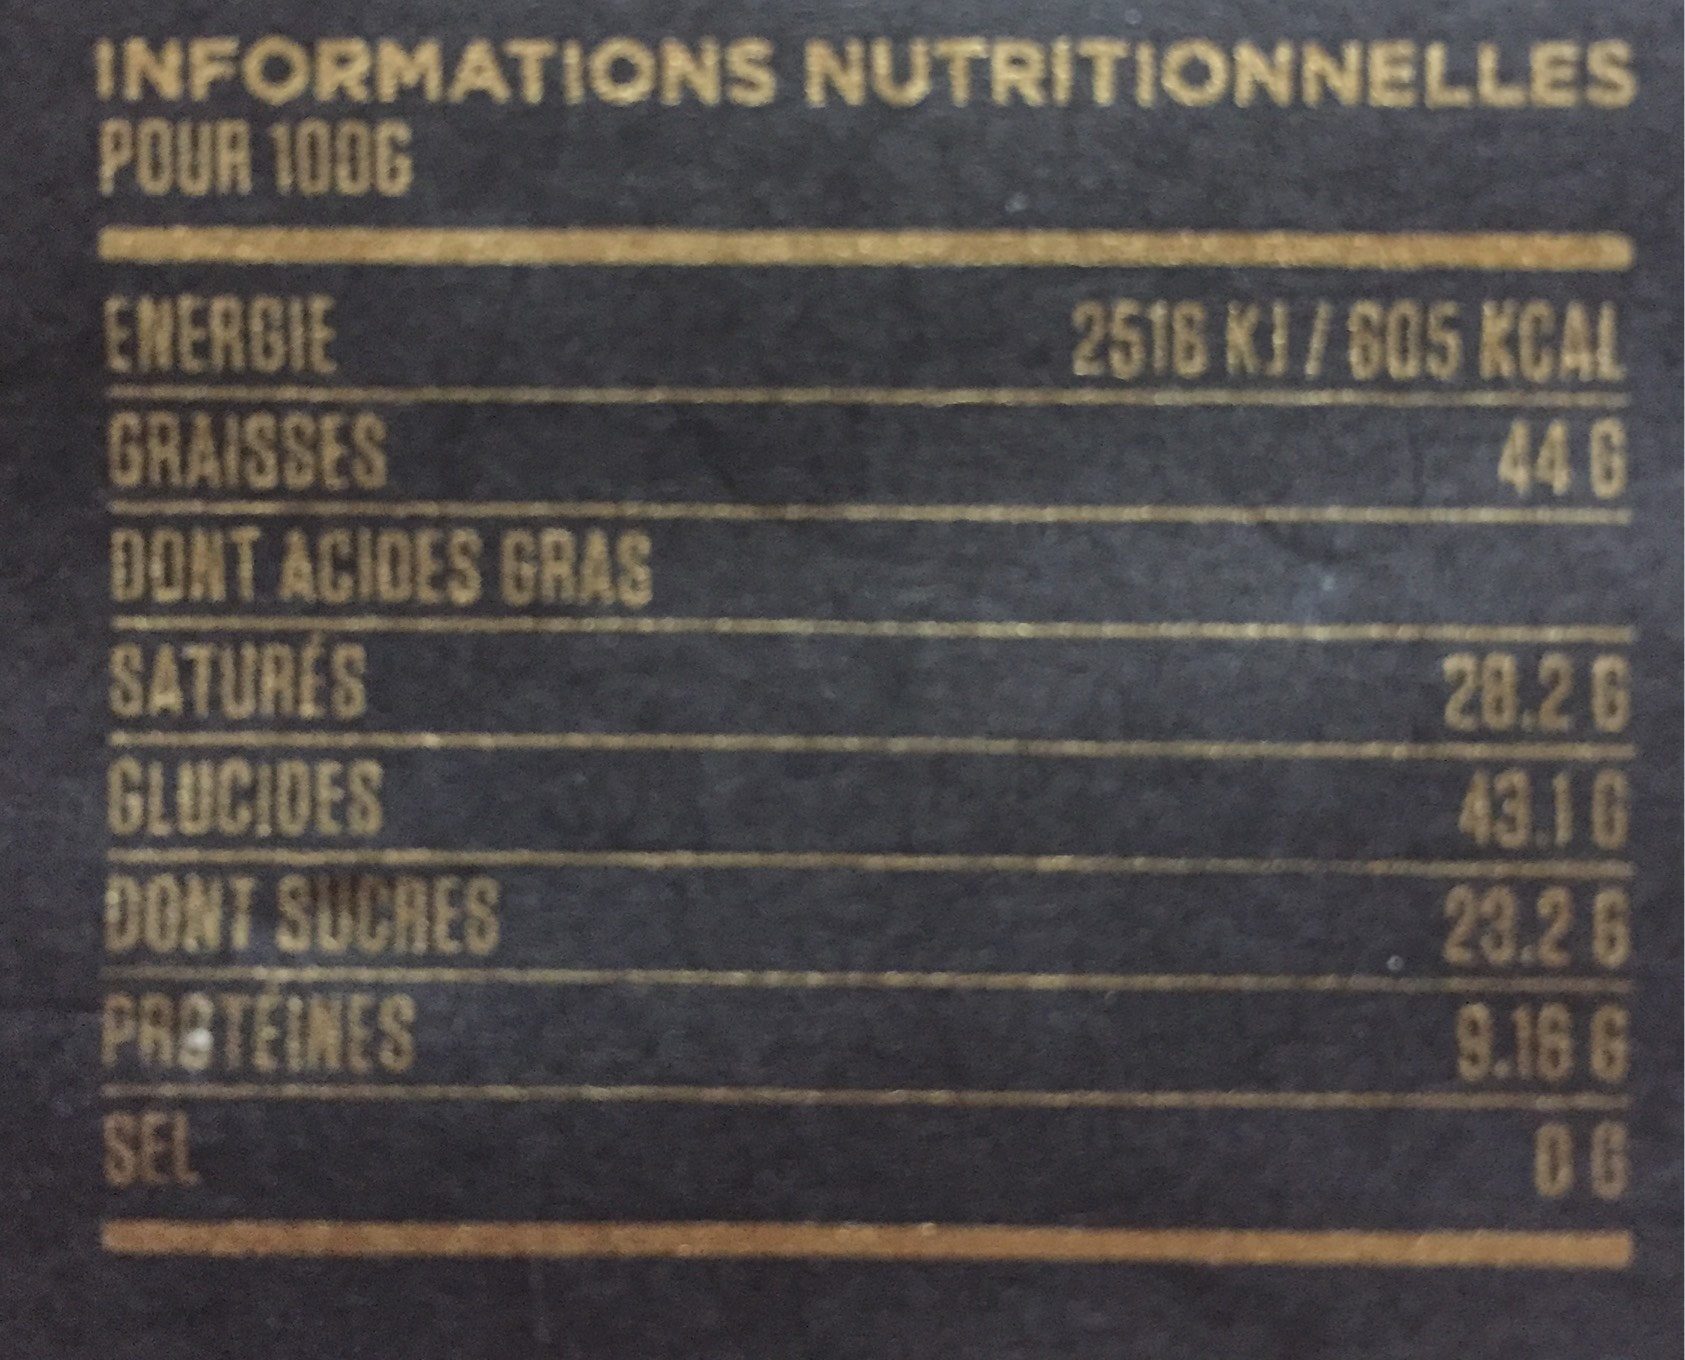 Tien Giange 80% Single Origin Vietnam Dark Chocolate - Nutrition facts